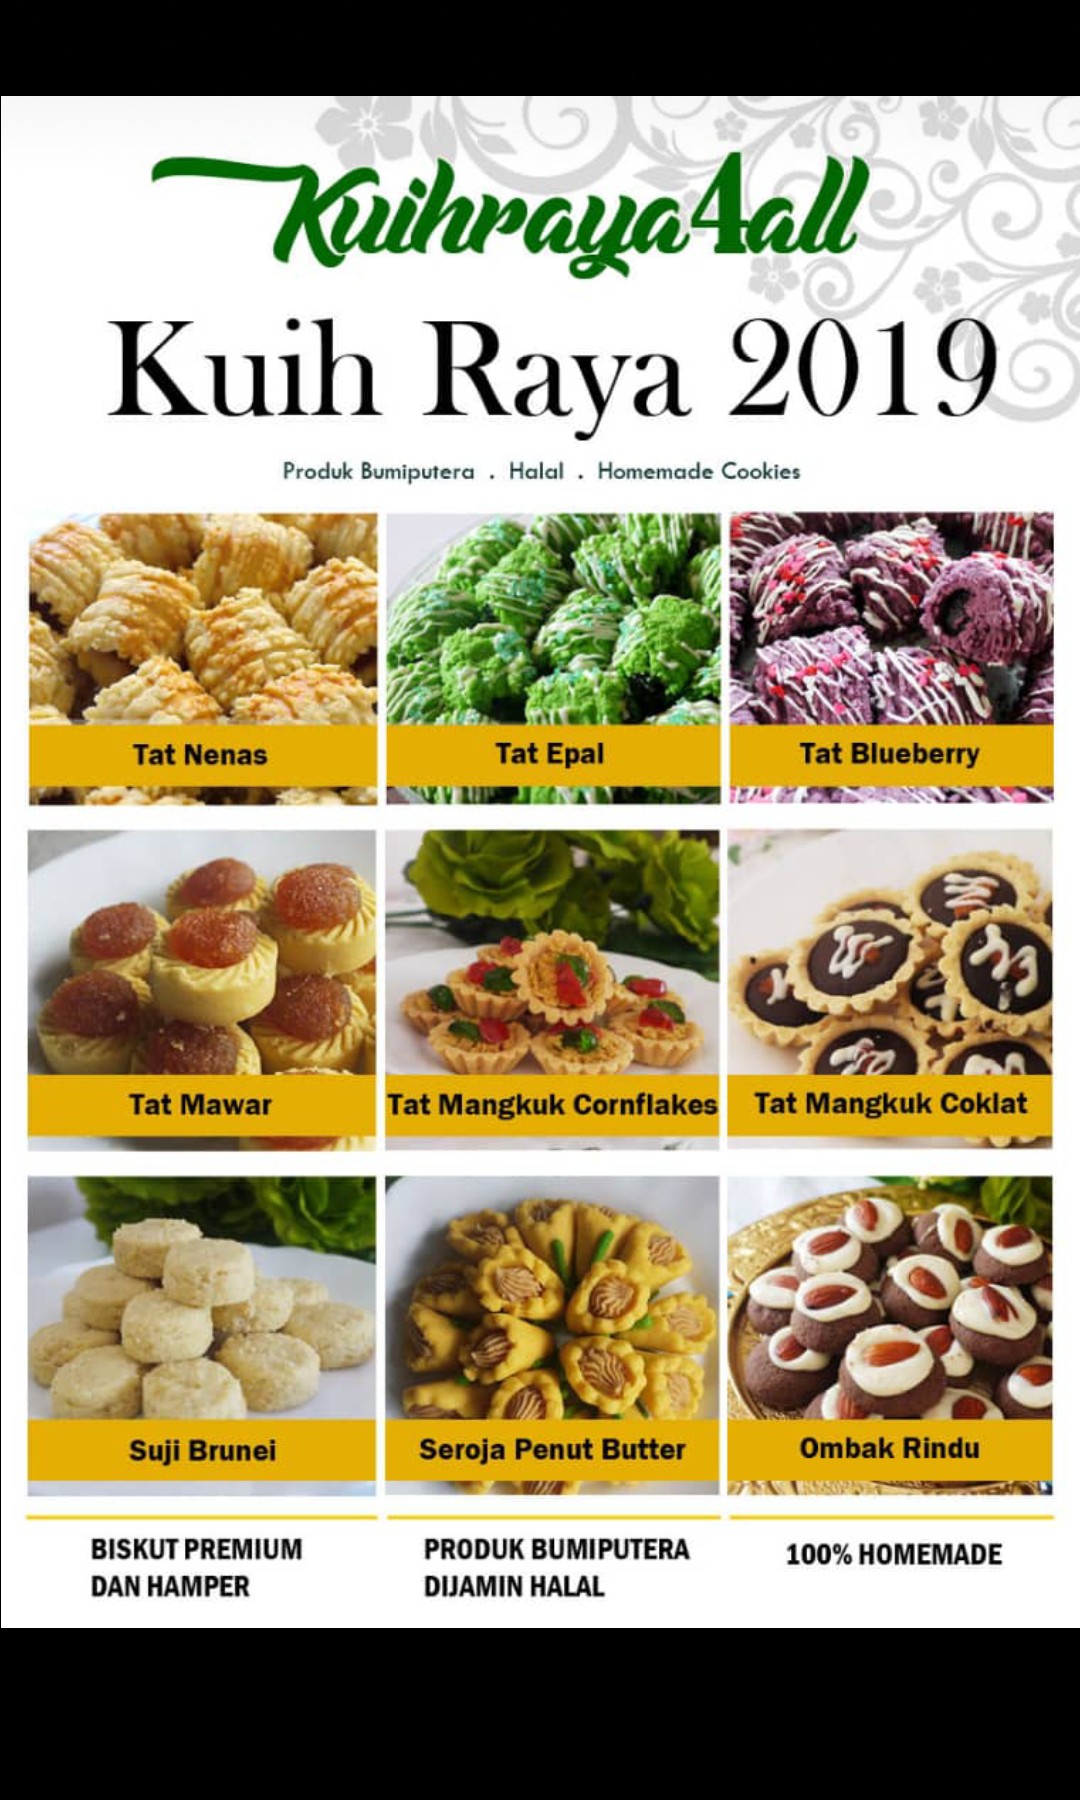 Kuih raya 2019, Food & Drinks, Baked Goods on Carousell